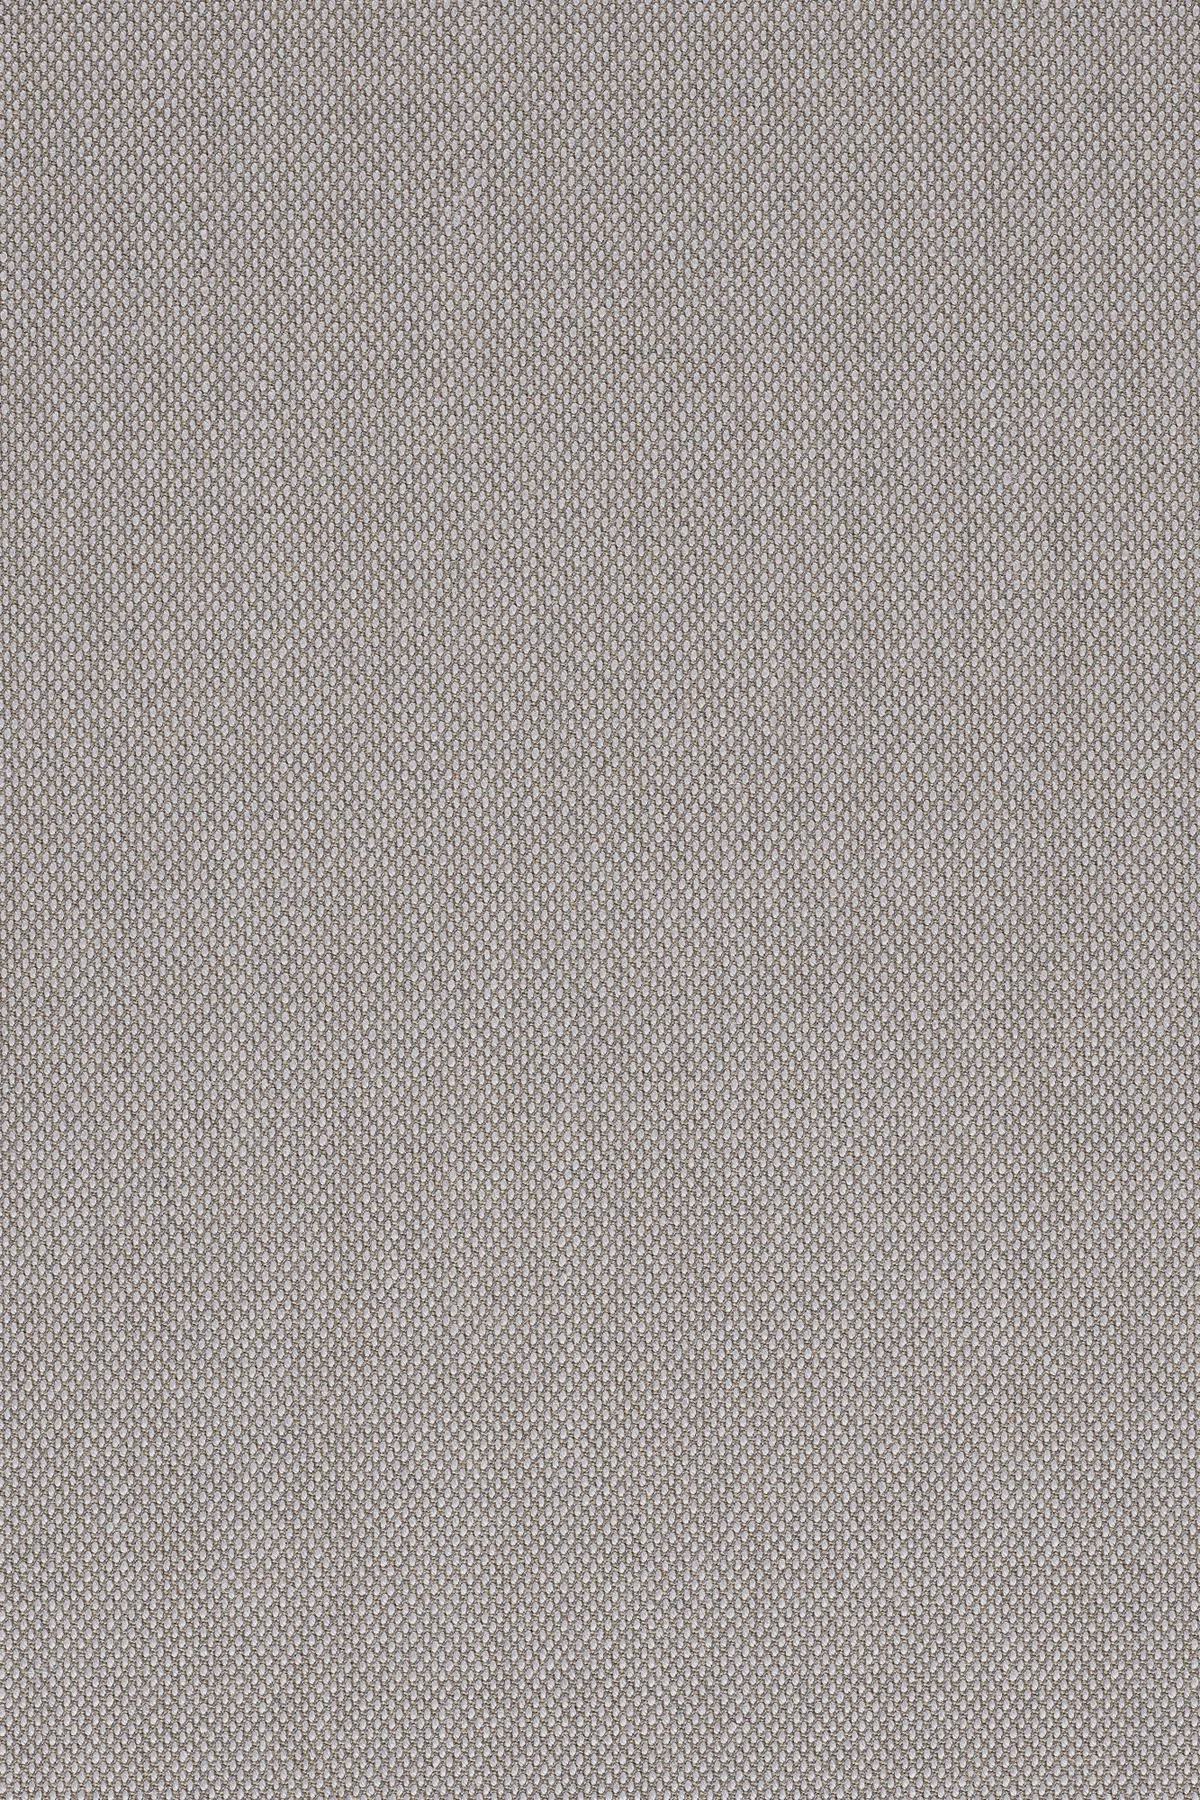 Fabric sample Steelcut Trio 3 246 grey